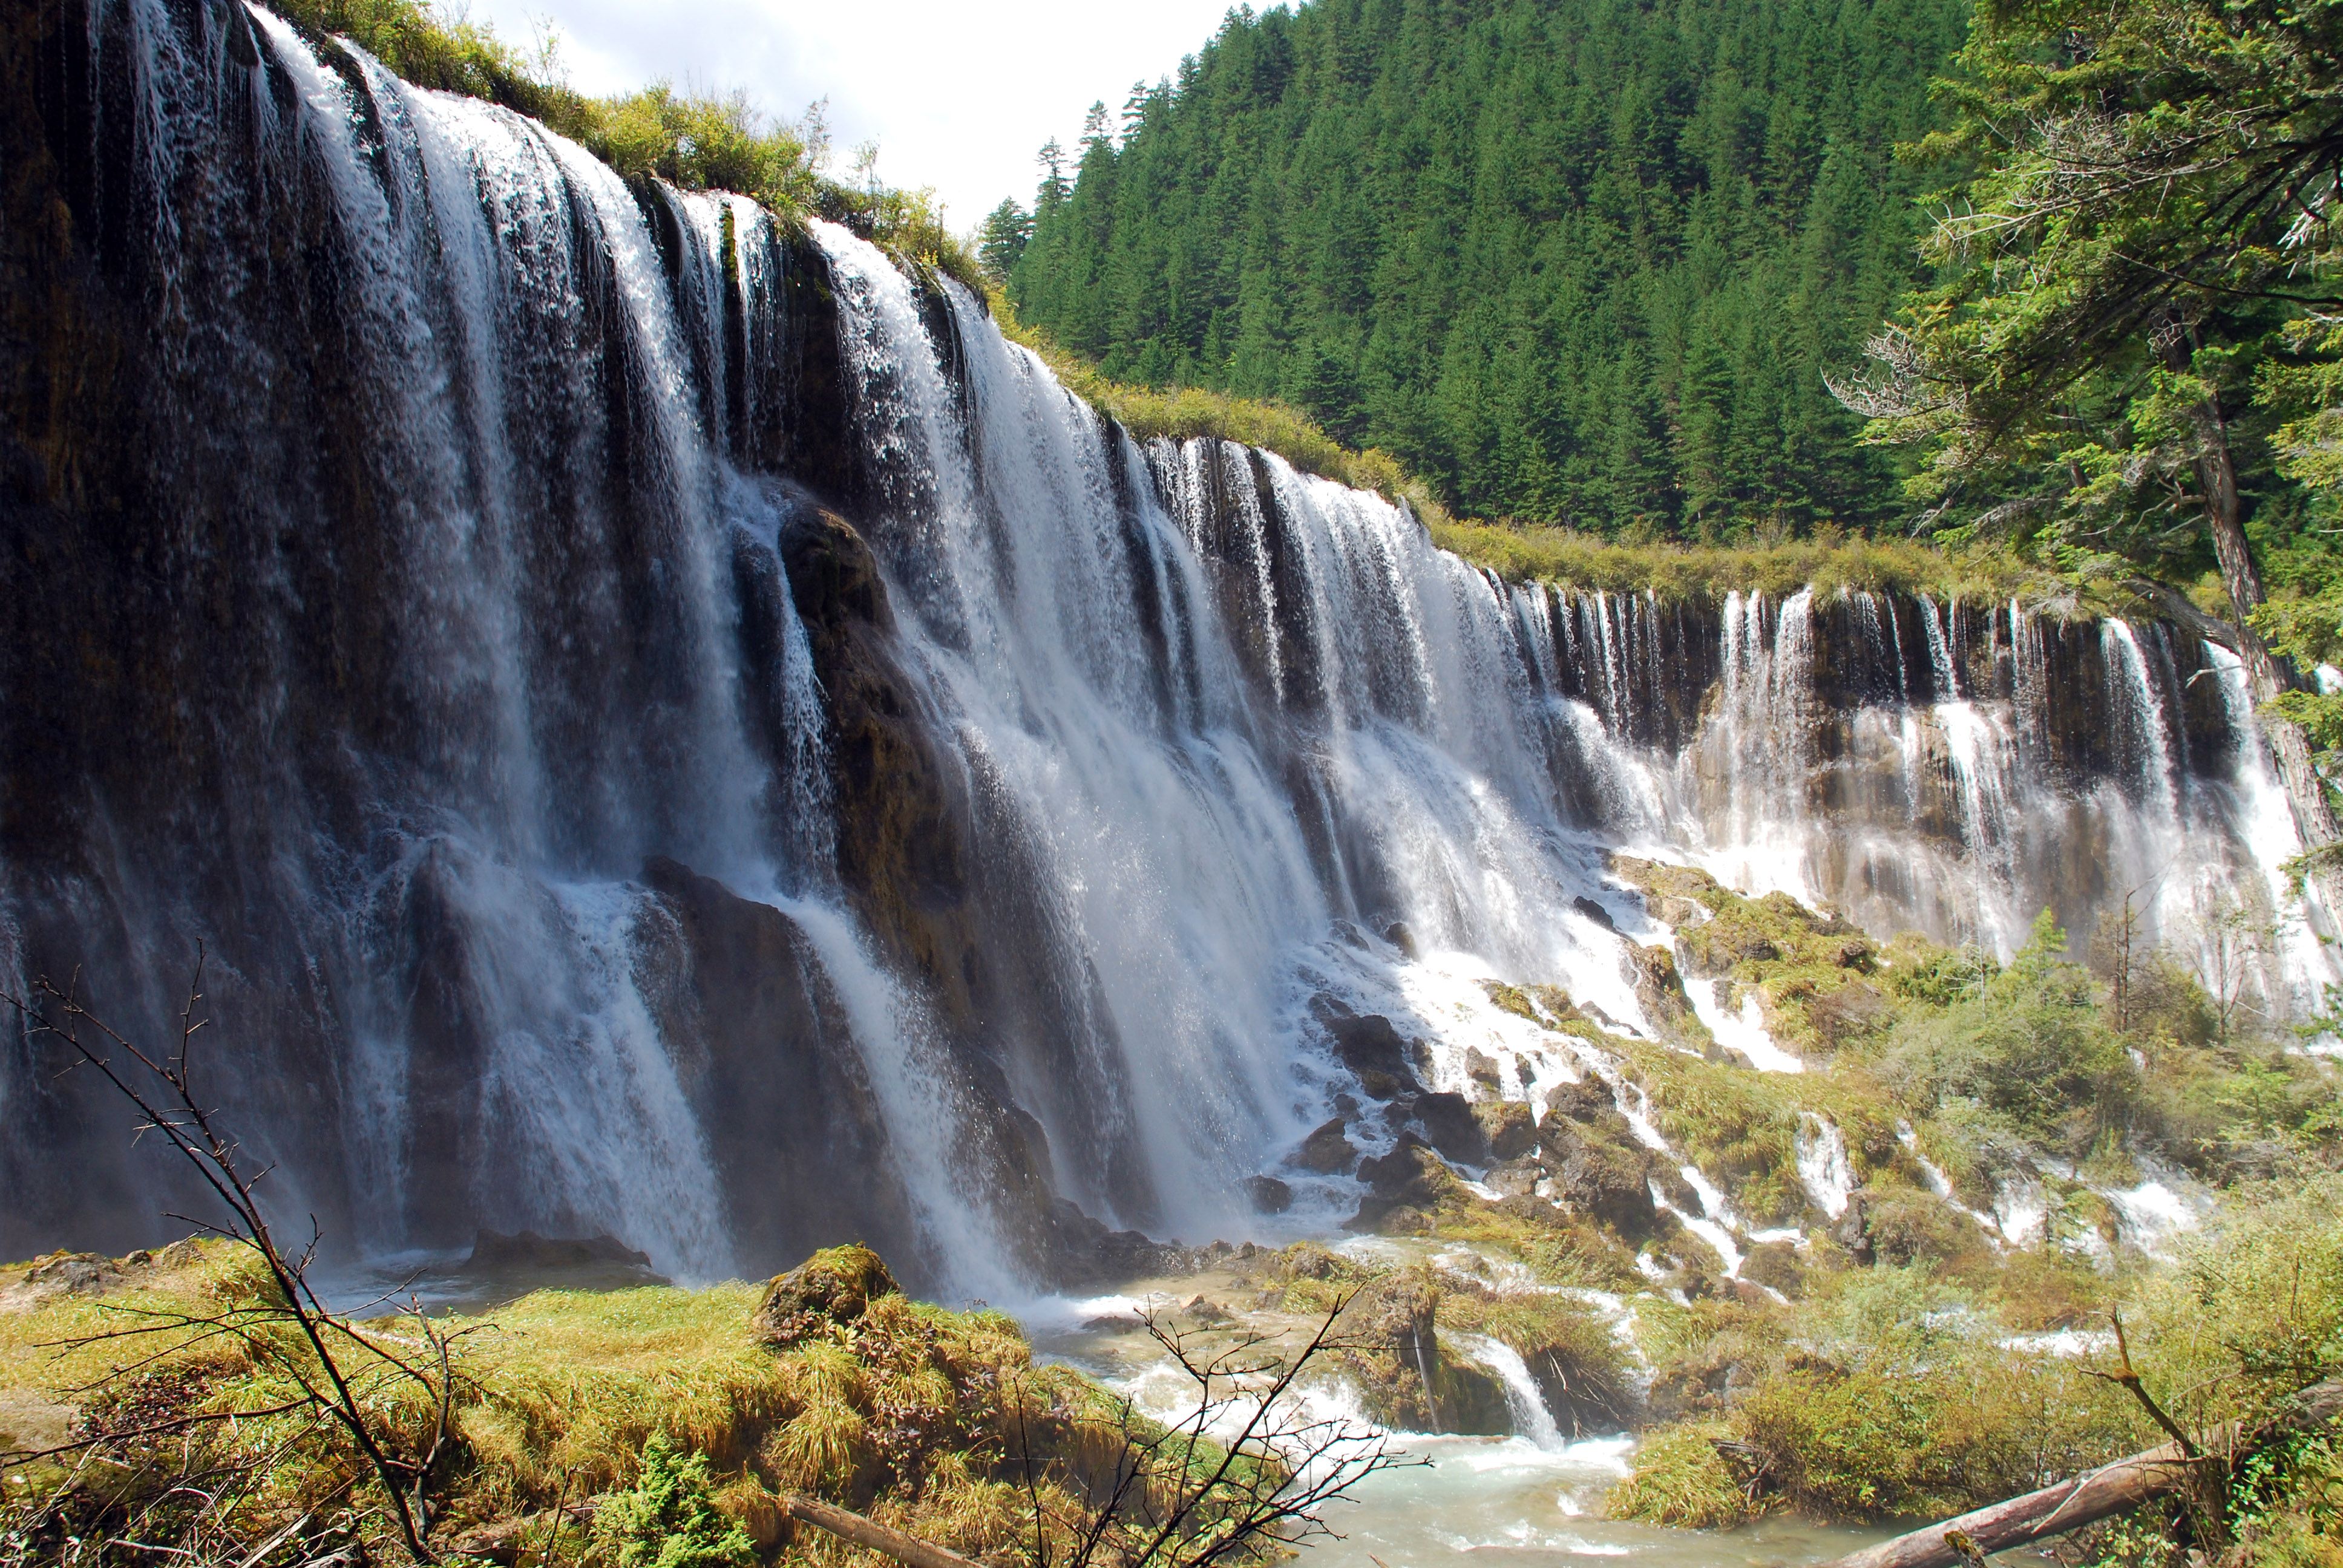 Nuorilang Waterfall Up Close, Travel Wallpaper and